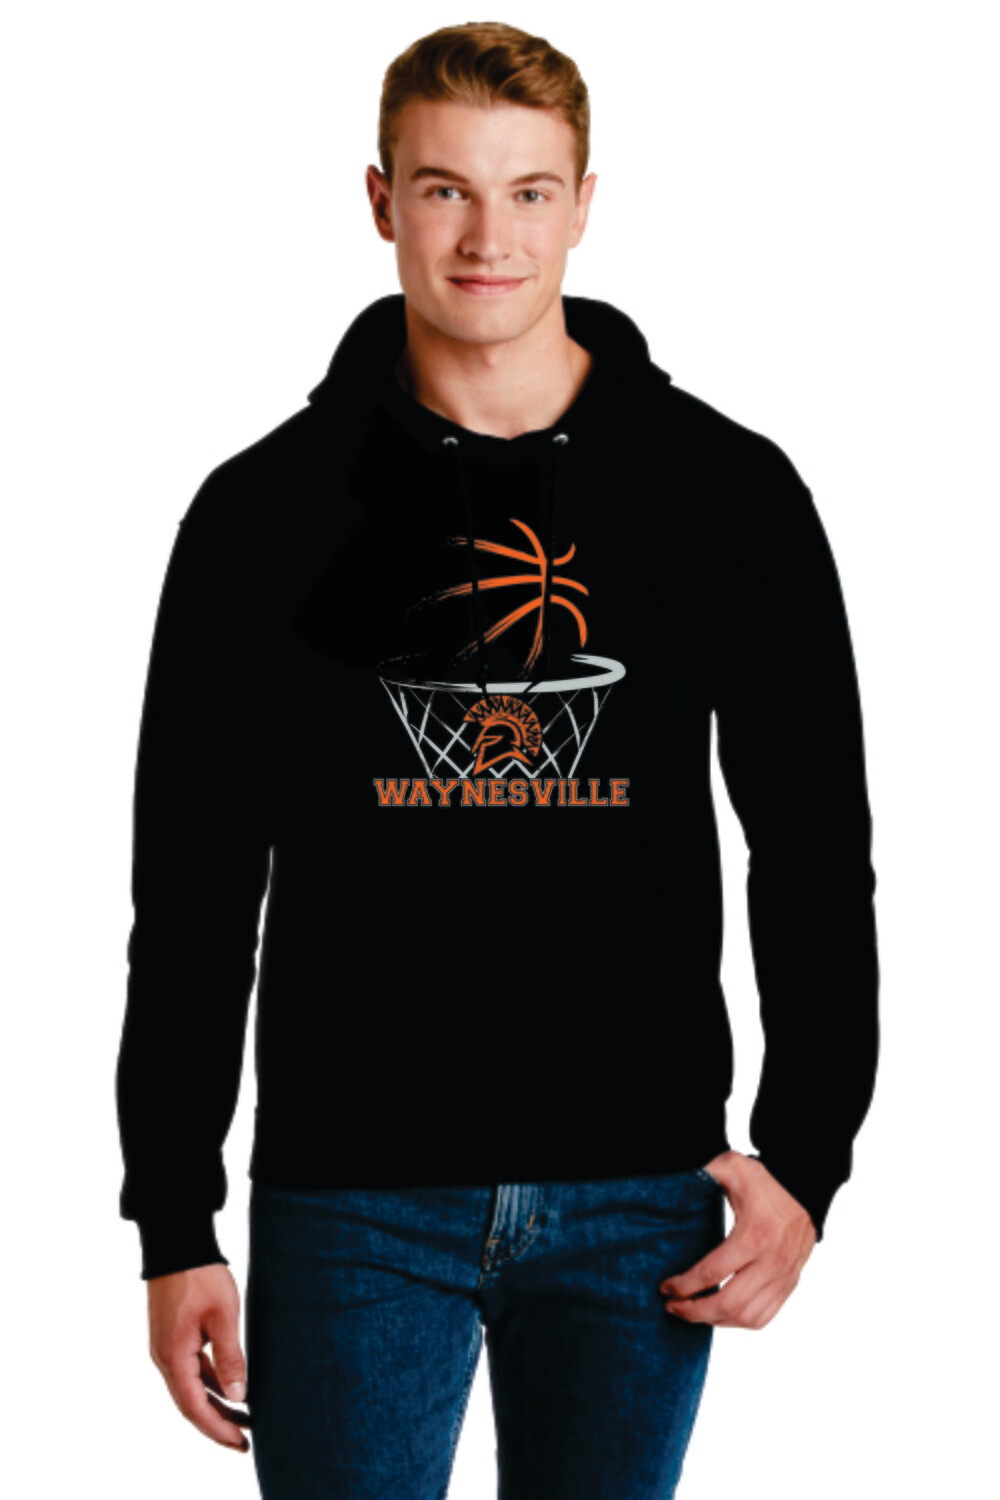 Waynesville Basketball Hoop
Hoodie & T-Shirt